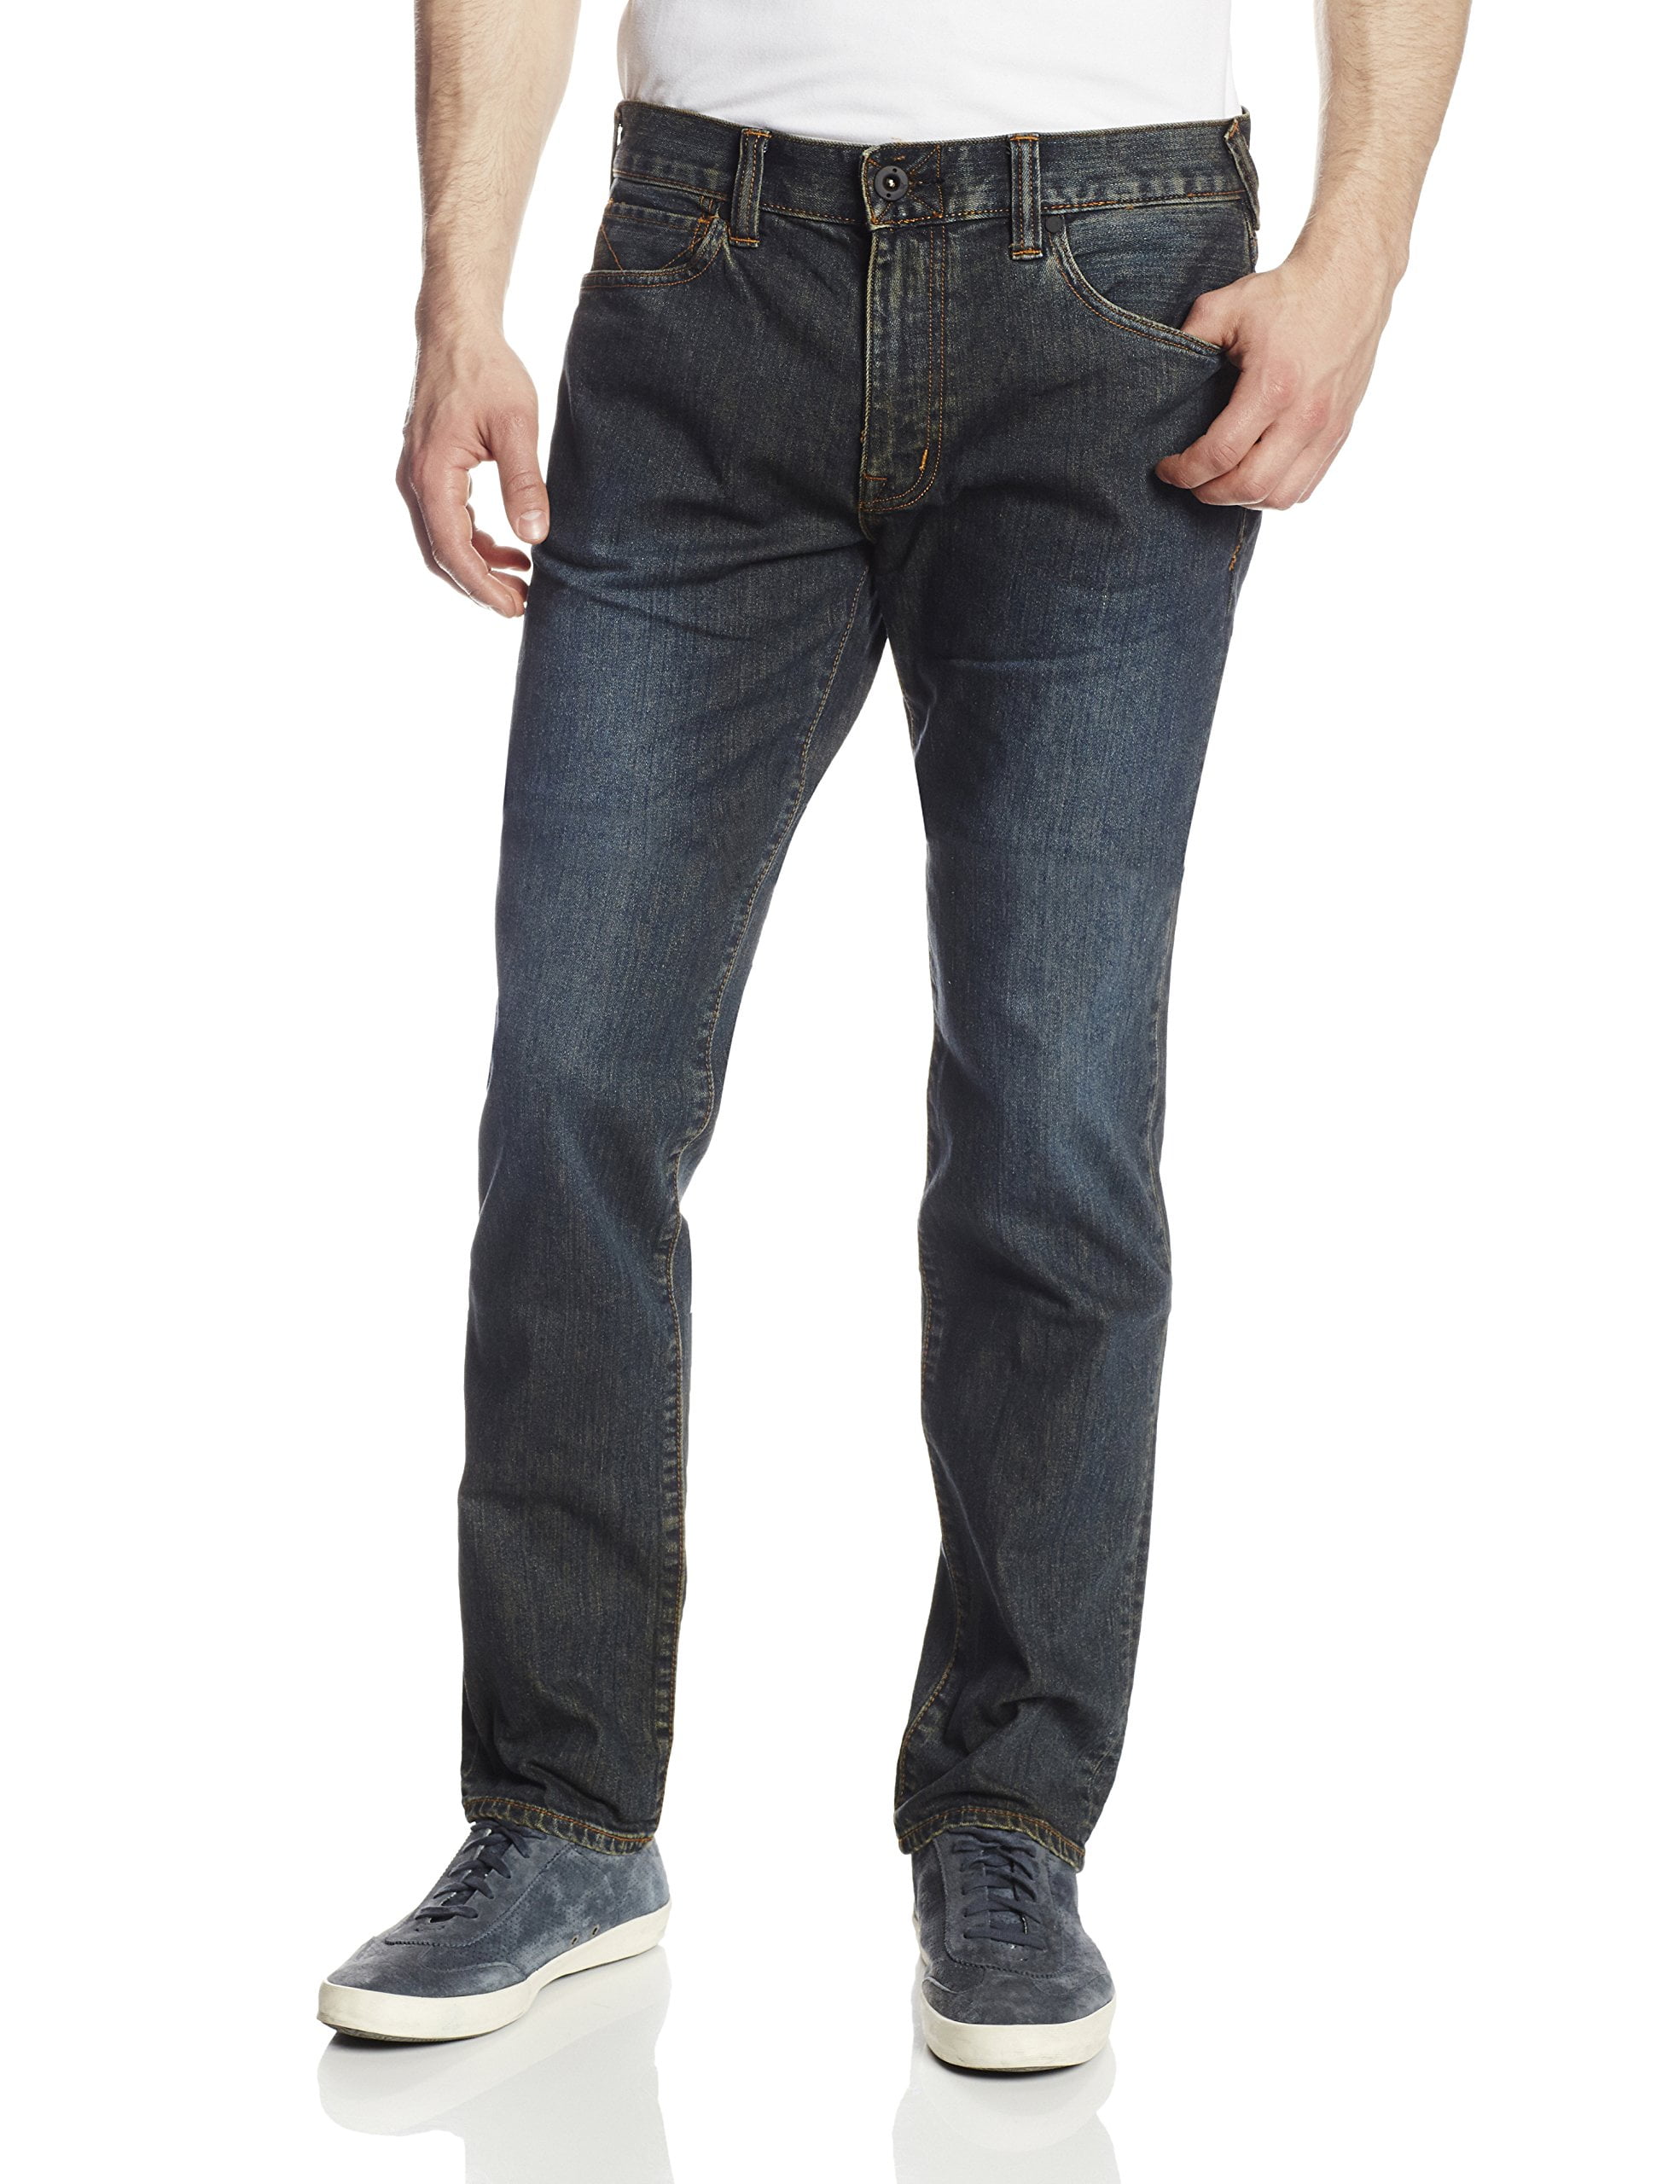 Hurley 84 Slim Denim Jeans 32x32) - Walmart.com